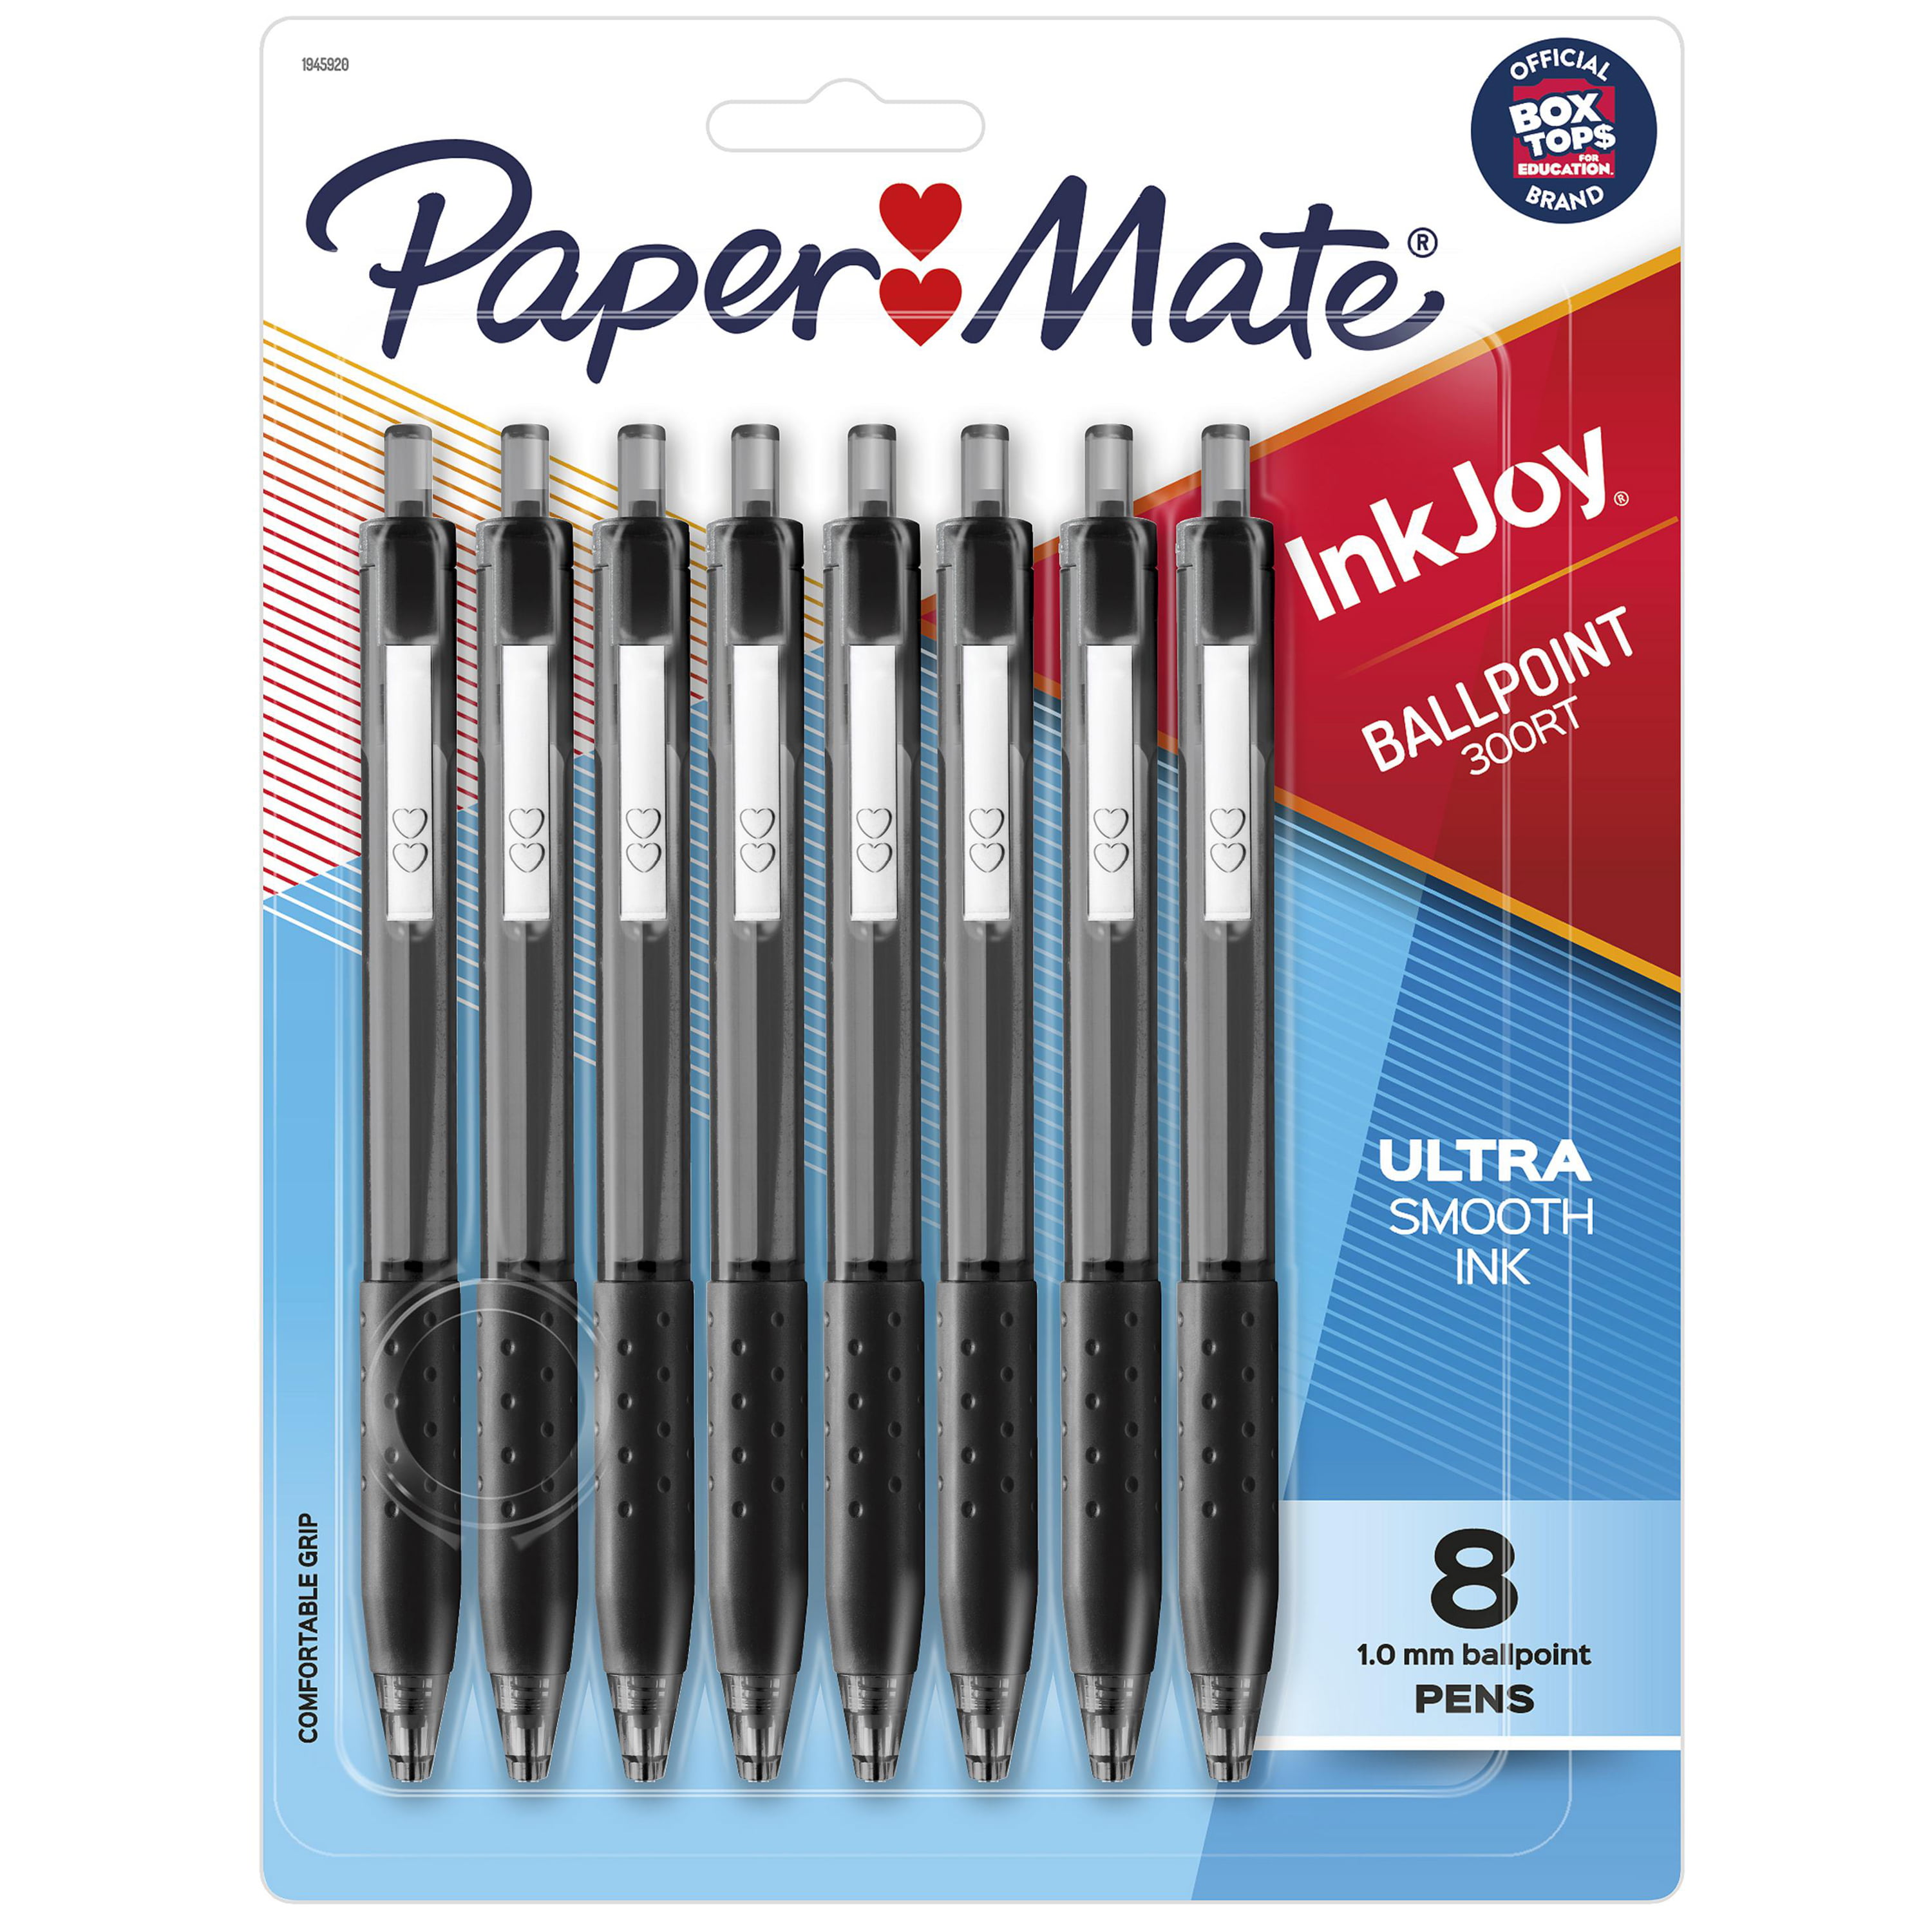 Medium Point 1.0 Point Blue 60 ct. Paper Mate Ballpoint Pens 